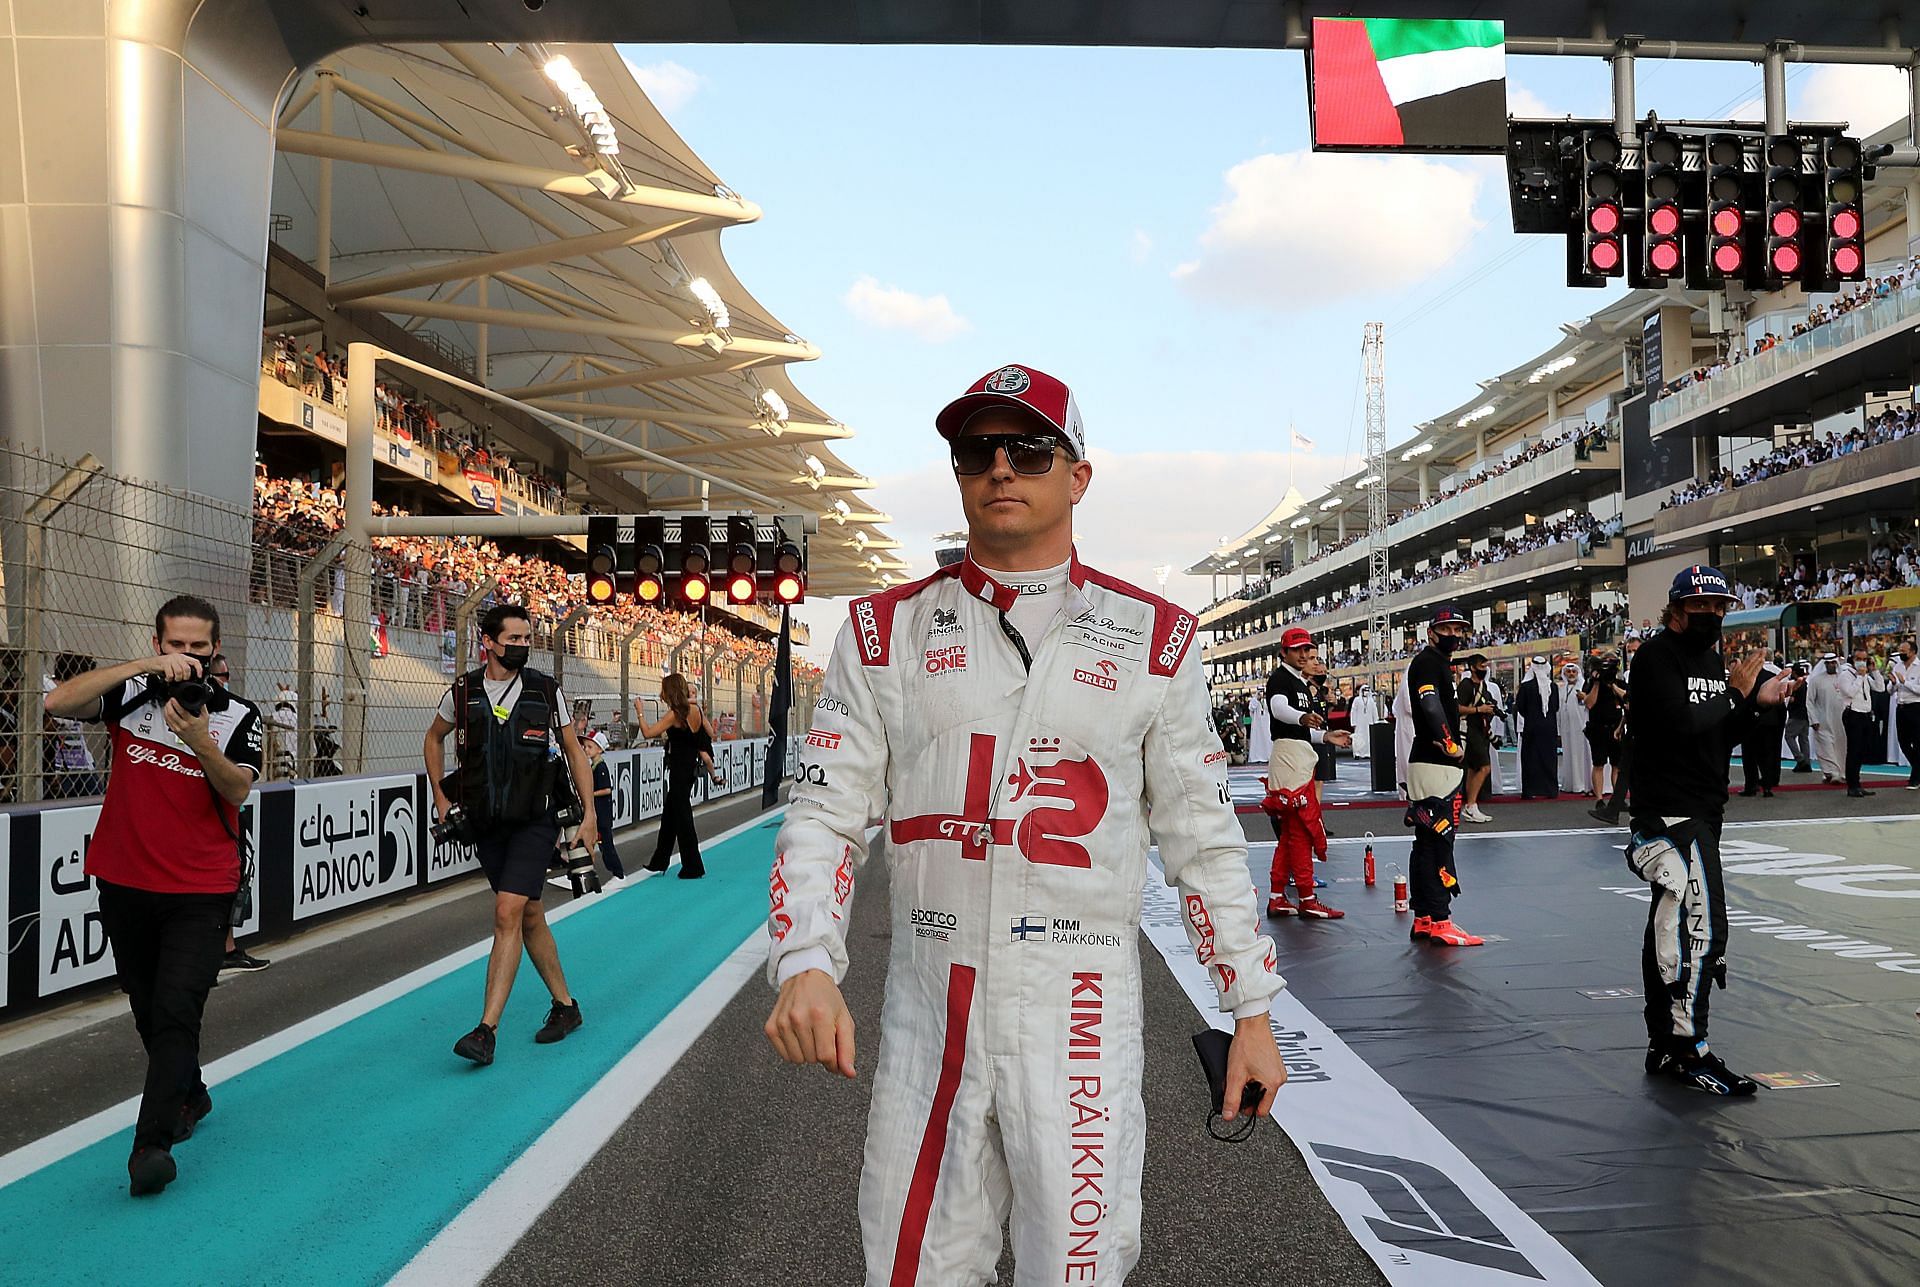 Kimi Raikkonen walks on the grid prior to the F1 Grand Prix of Abu Dhabi at Yas Marina Circuit. (Photo by Kamran Jebreili - Pool/Getty Images)